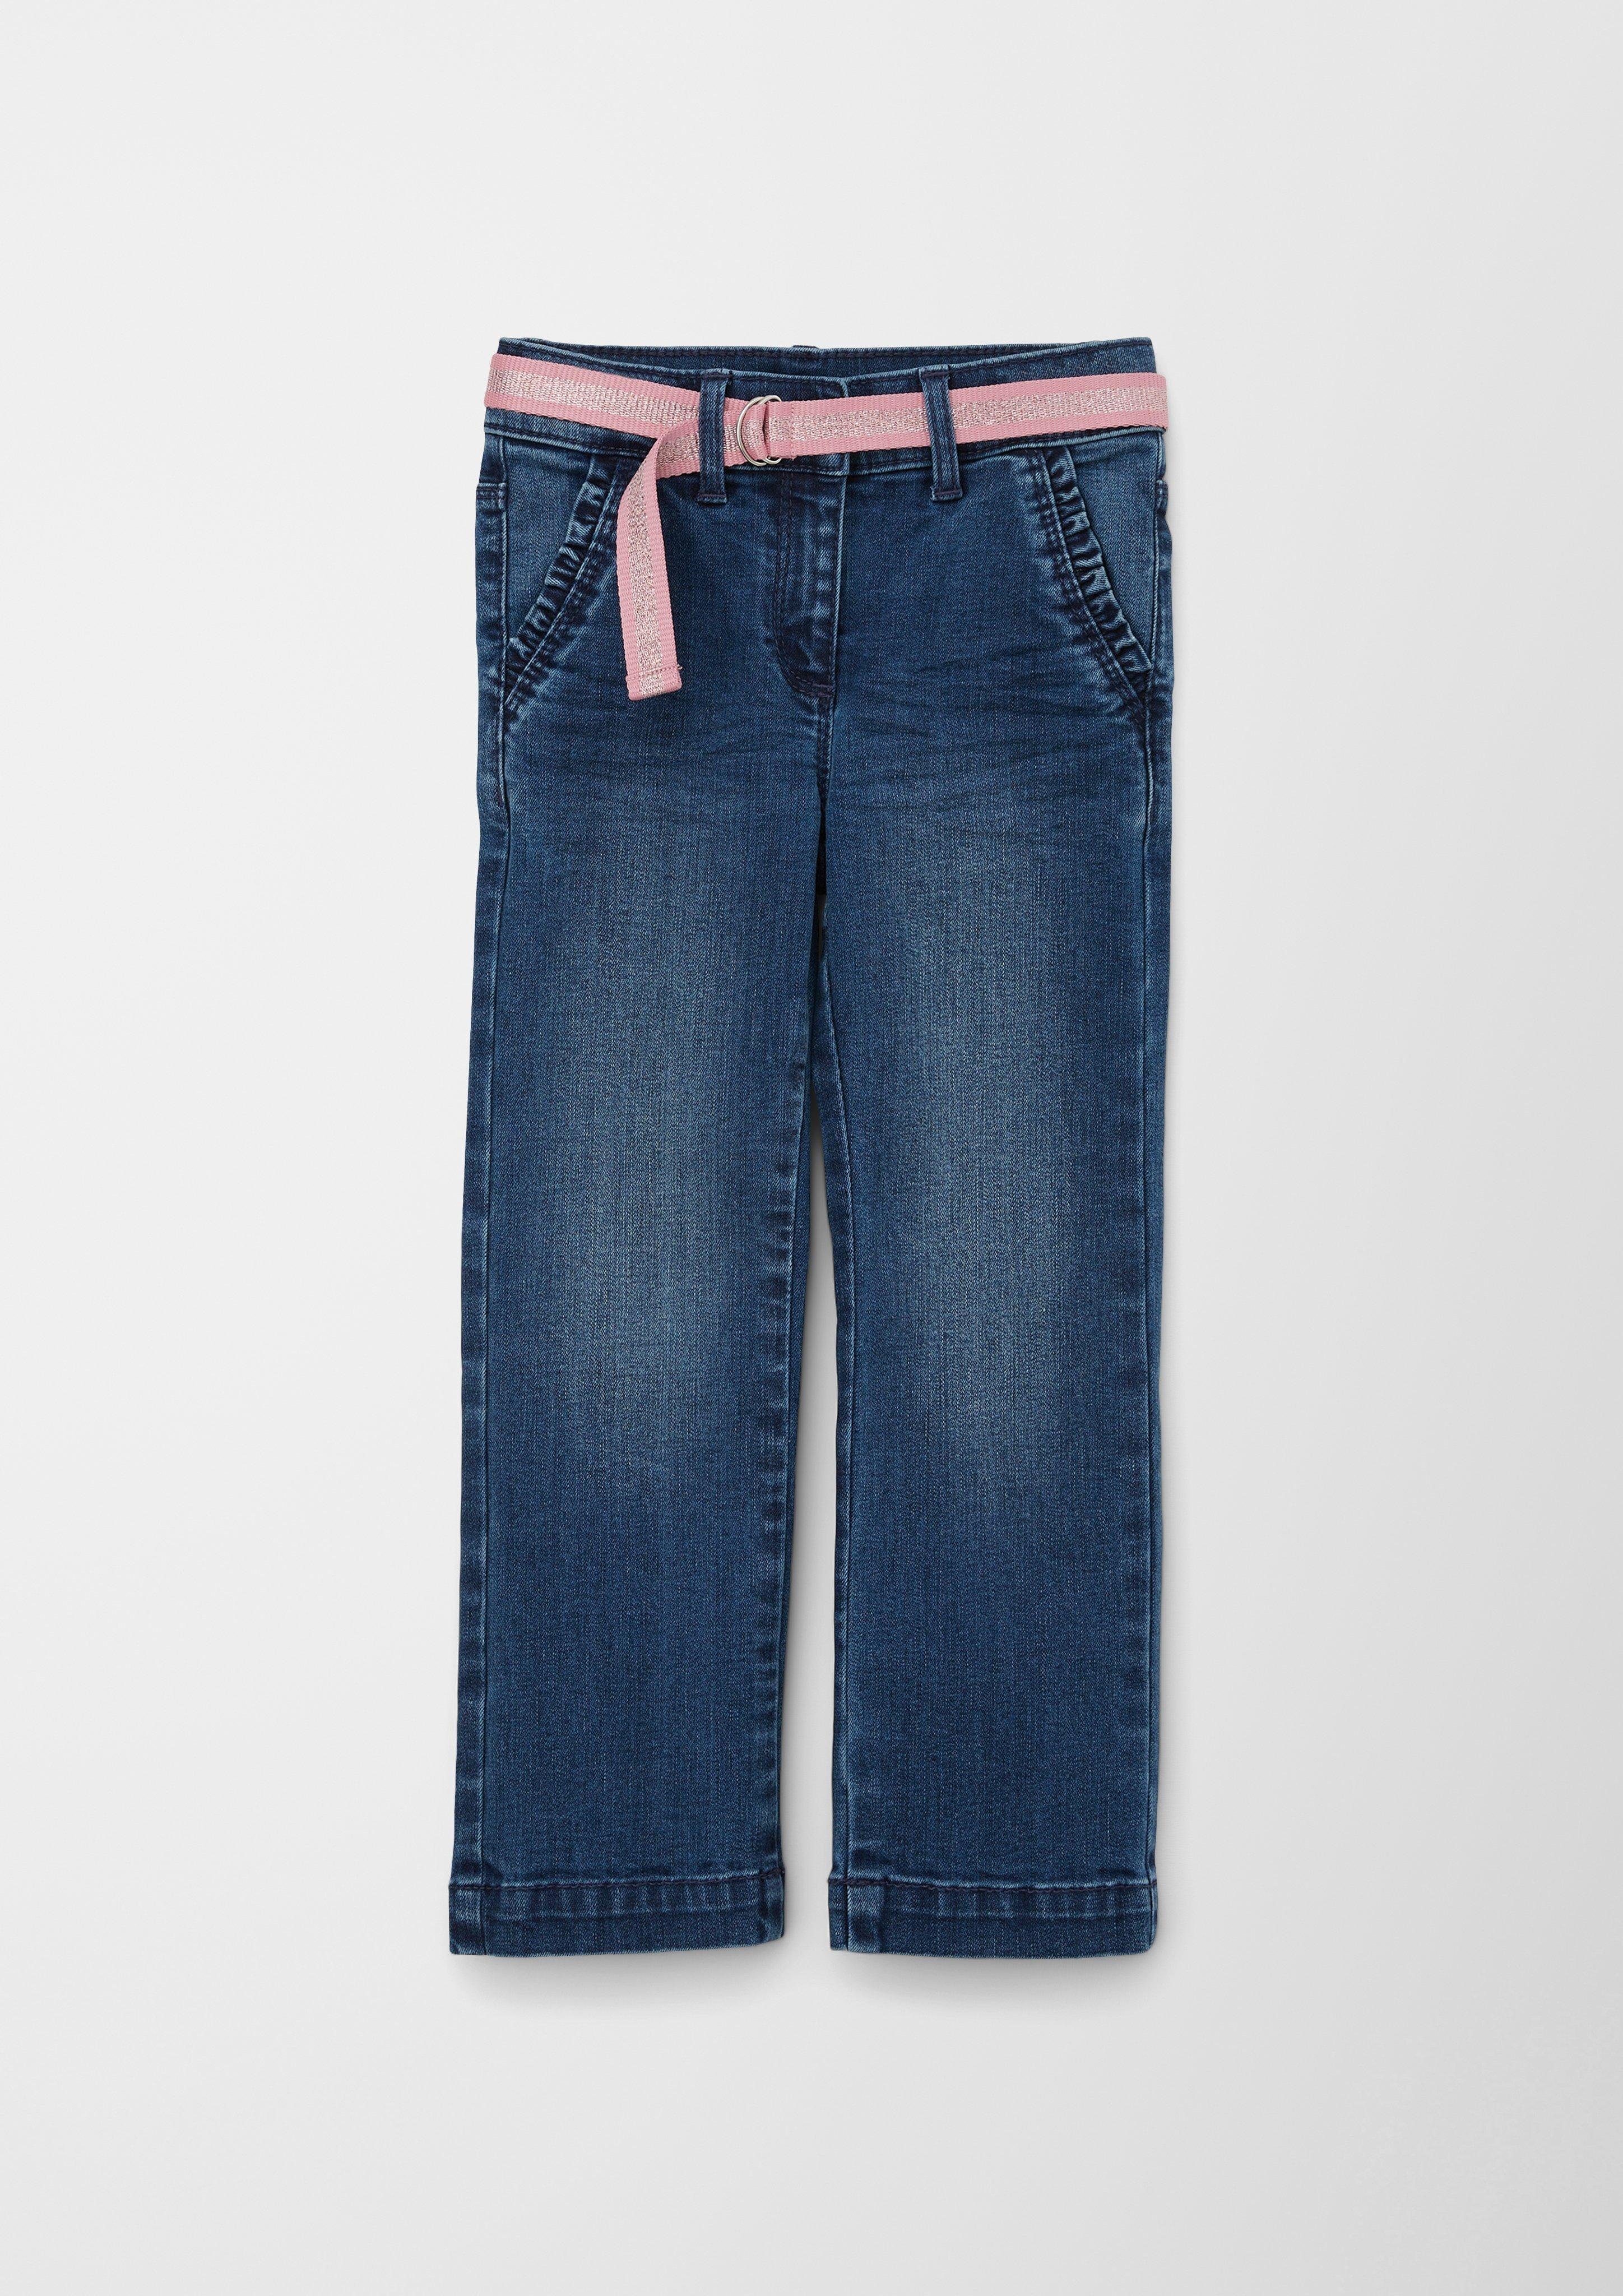 s.Oliver Stoffhose Jeans / Regular Fit / Mid Rise / Straight Leg Rüschen, Waschung, Schmuck-Detail